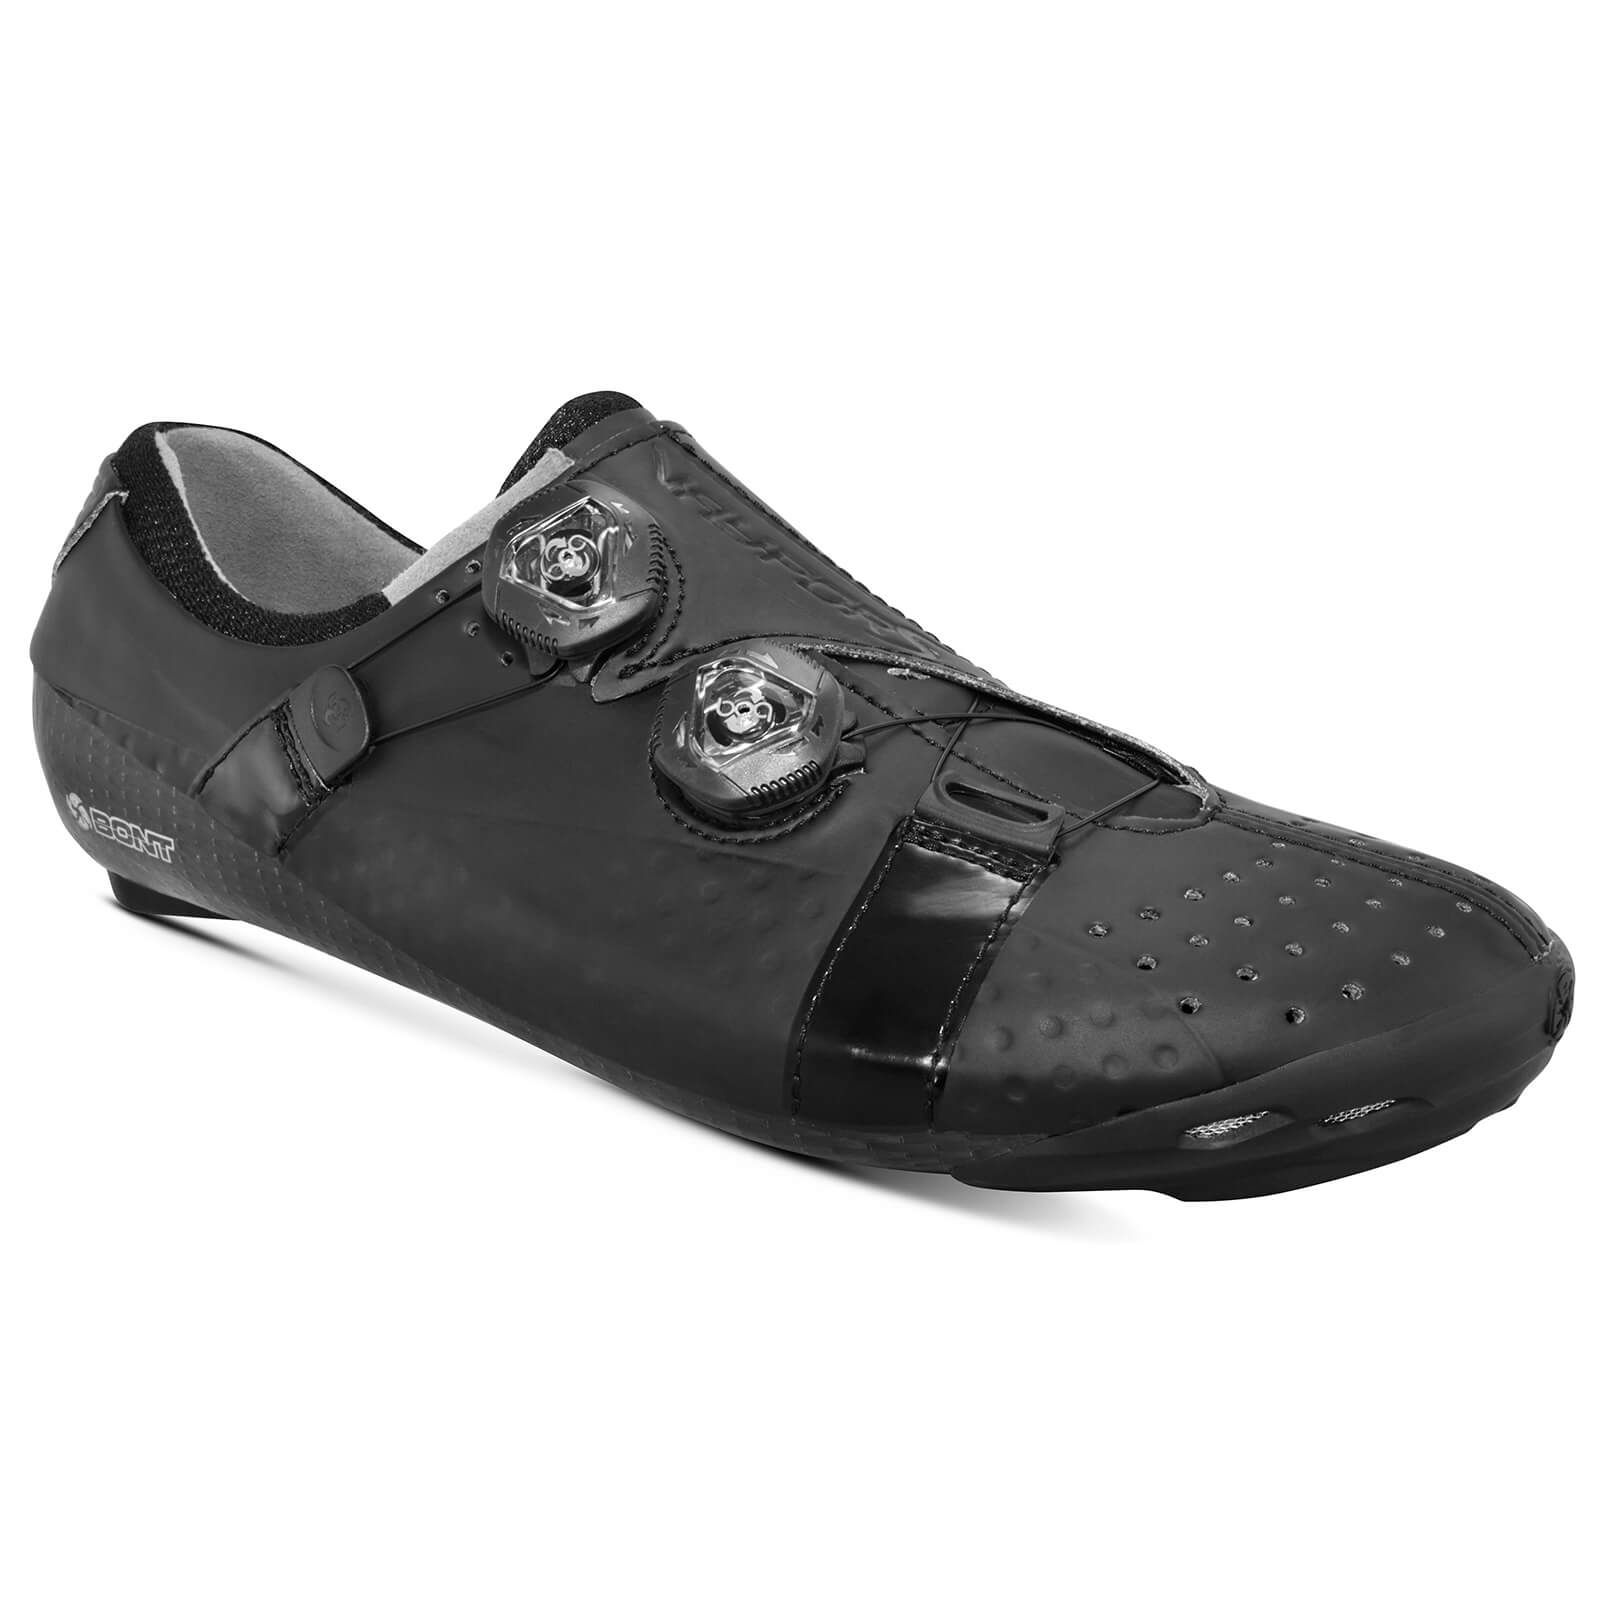 Bont Vaypor S Road Shoes - EU 44 - Standard Fit - Schwarz